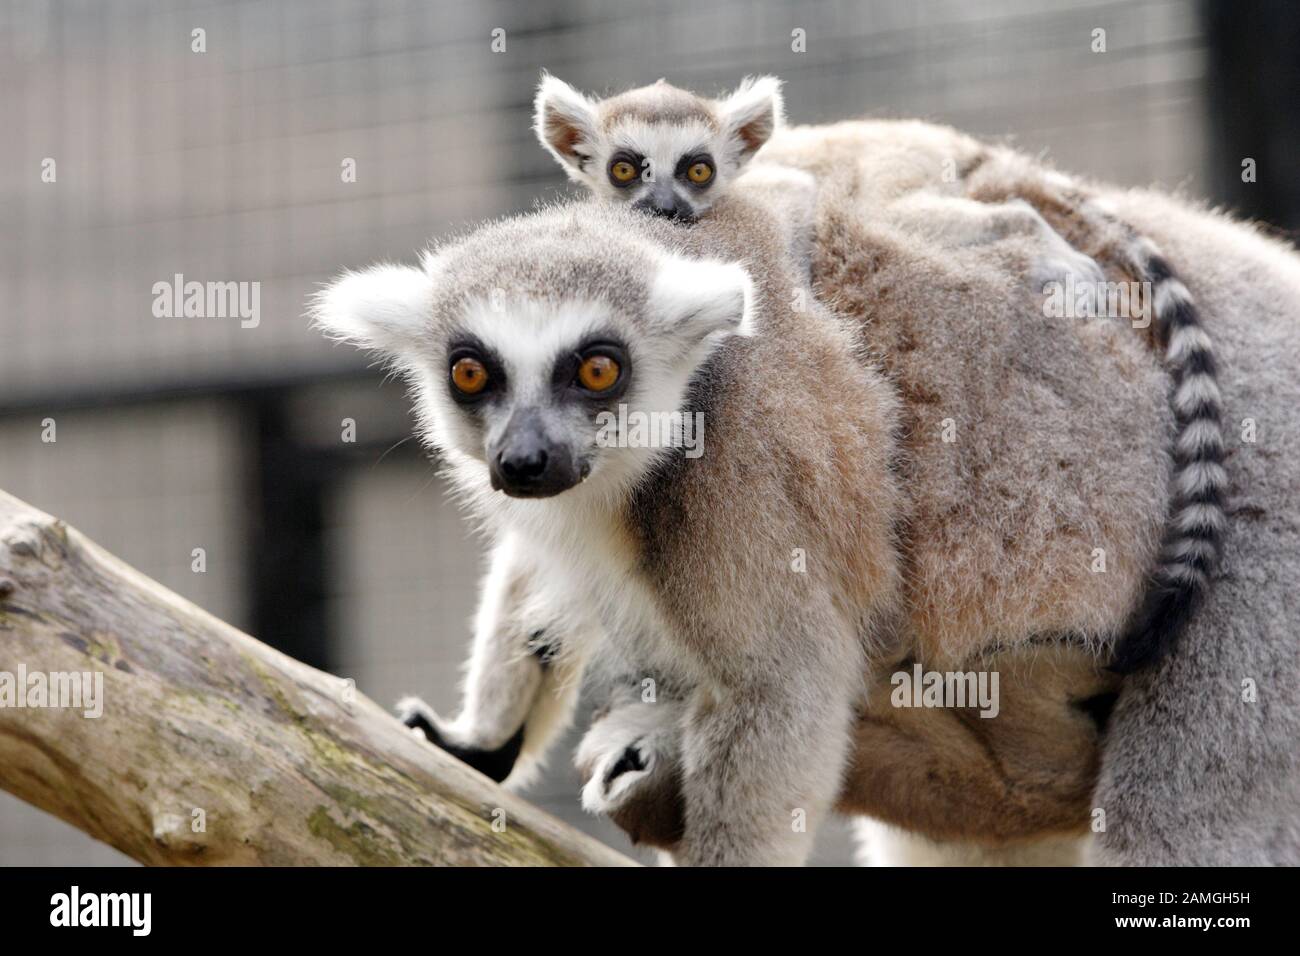 Madre de lémur de cola anillada con dos bebés. Lemur catta, primate estrepsirrrino Foto de stock